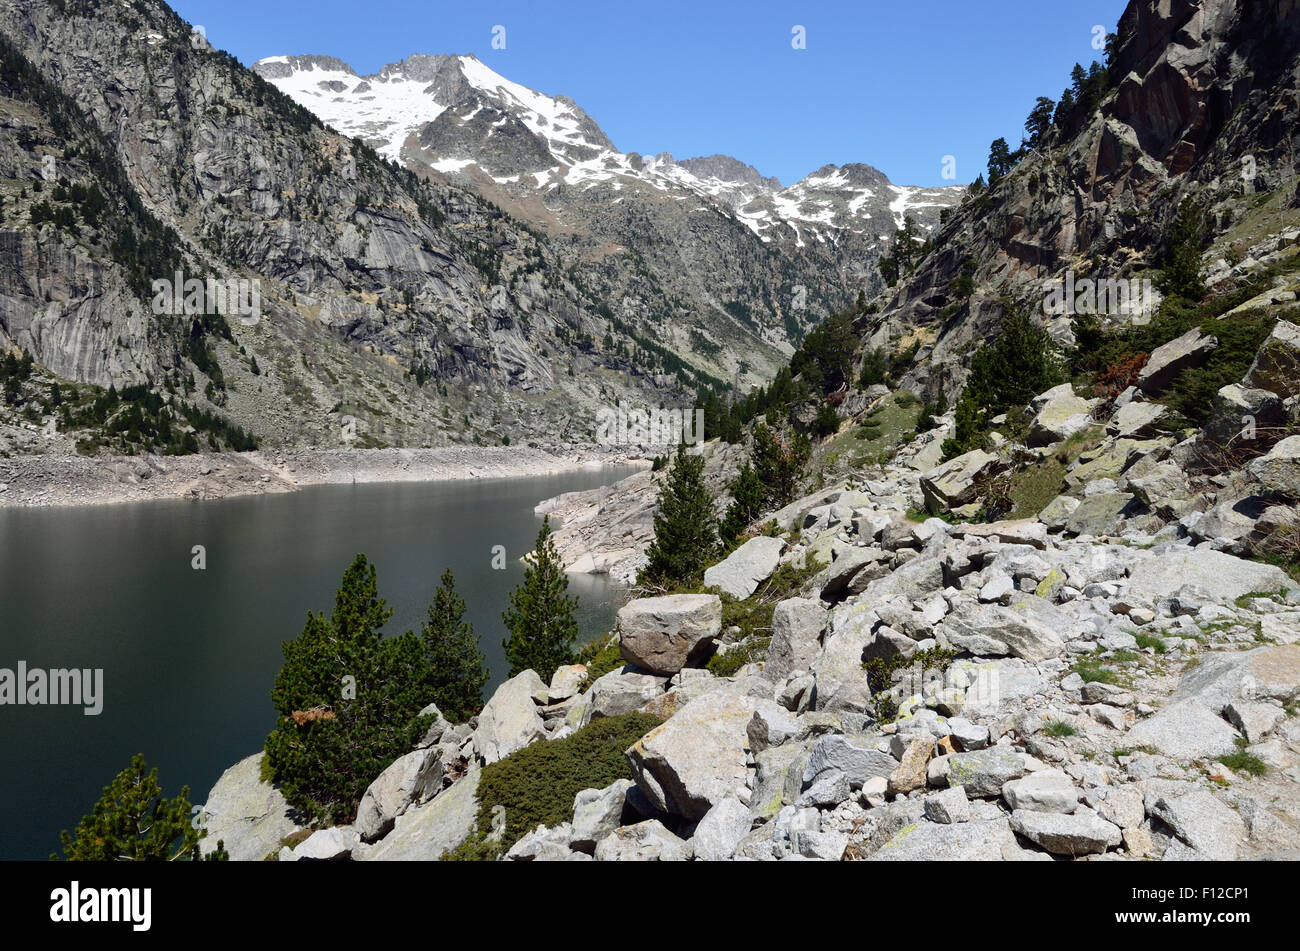 Hiking trail along the mountain lake Stock Photo